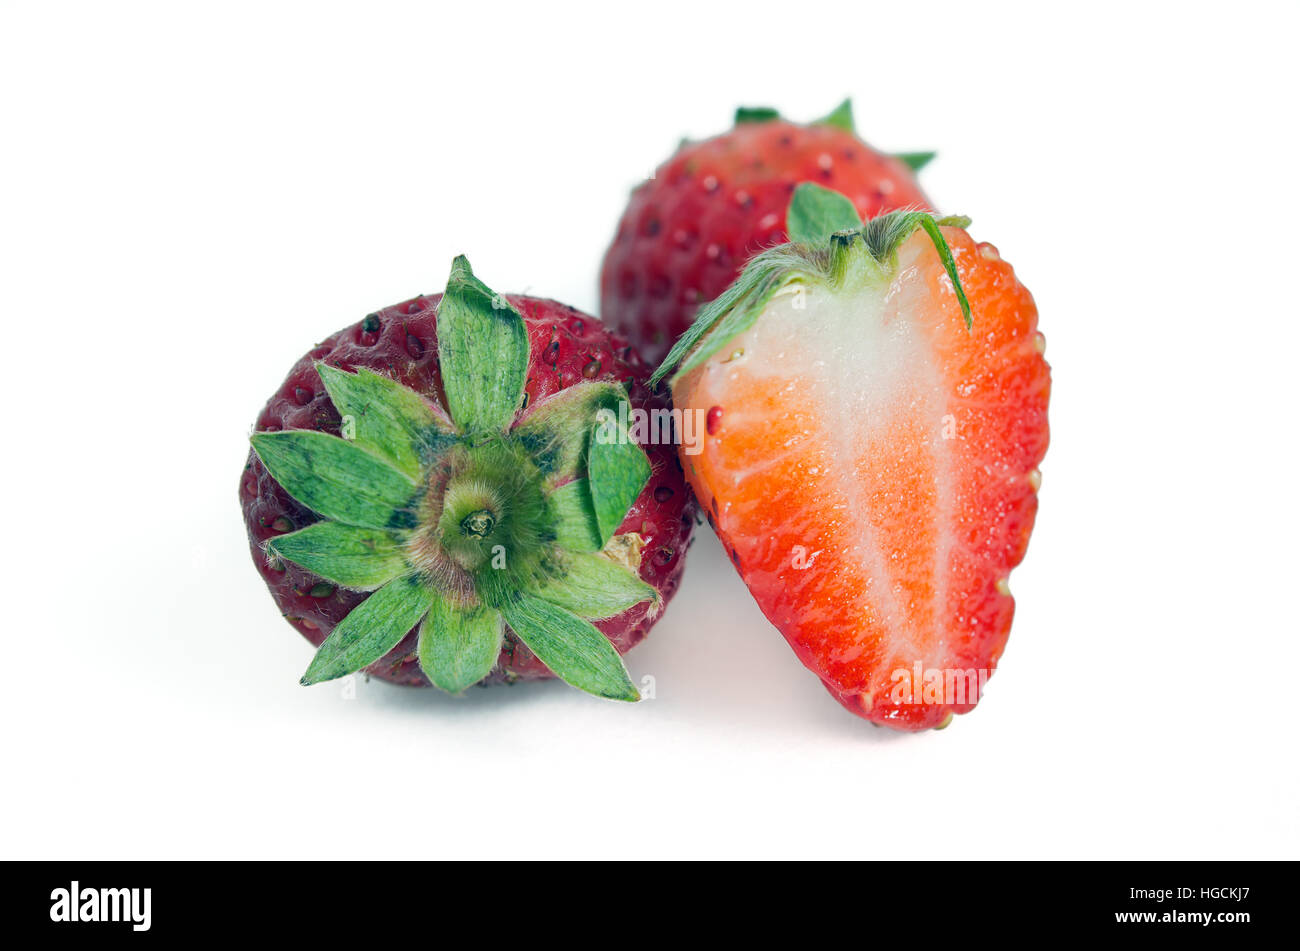 Strawberry fruit (Also named as Fragaria strawberry or Fragaria ananassa berry) isolated on white background Stock Photo